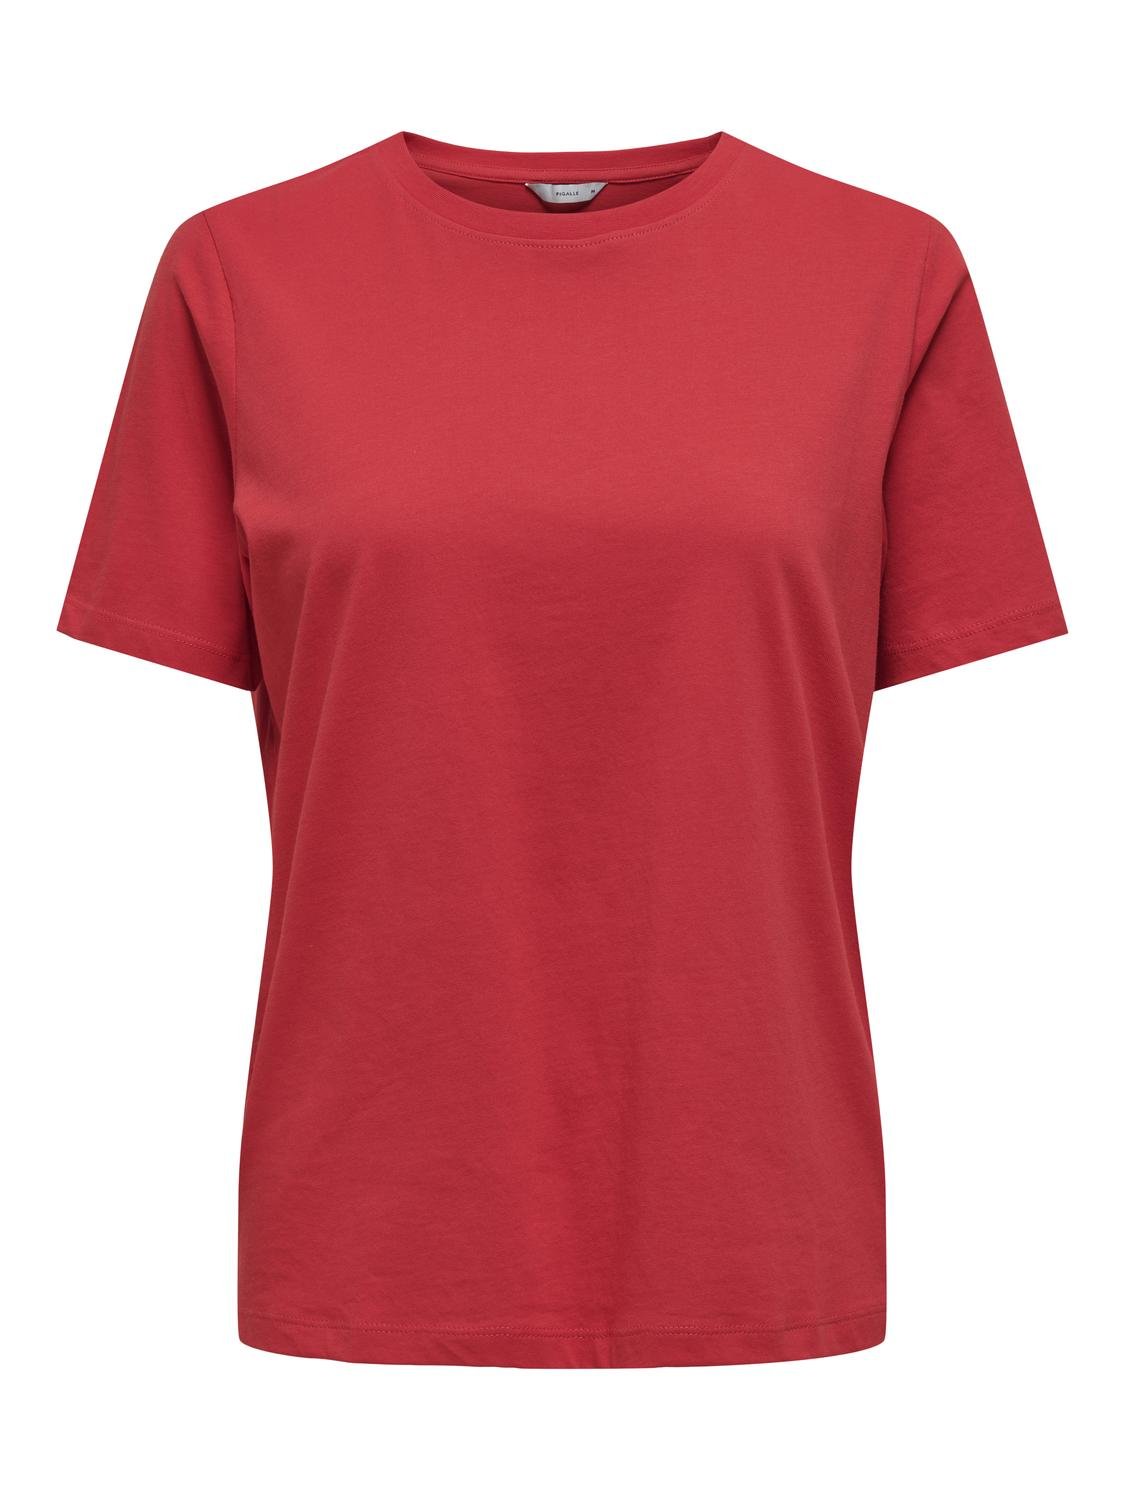 PGAMAZE T-Shirt - True Red